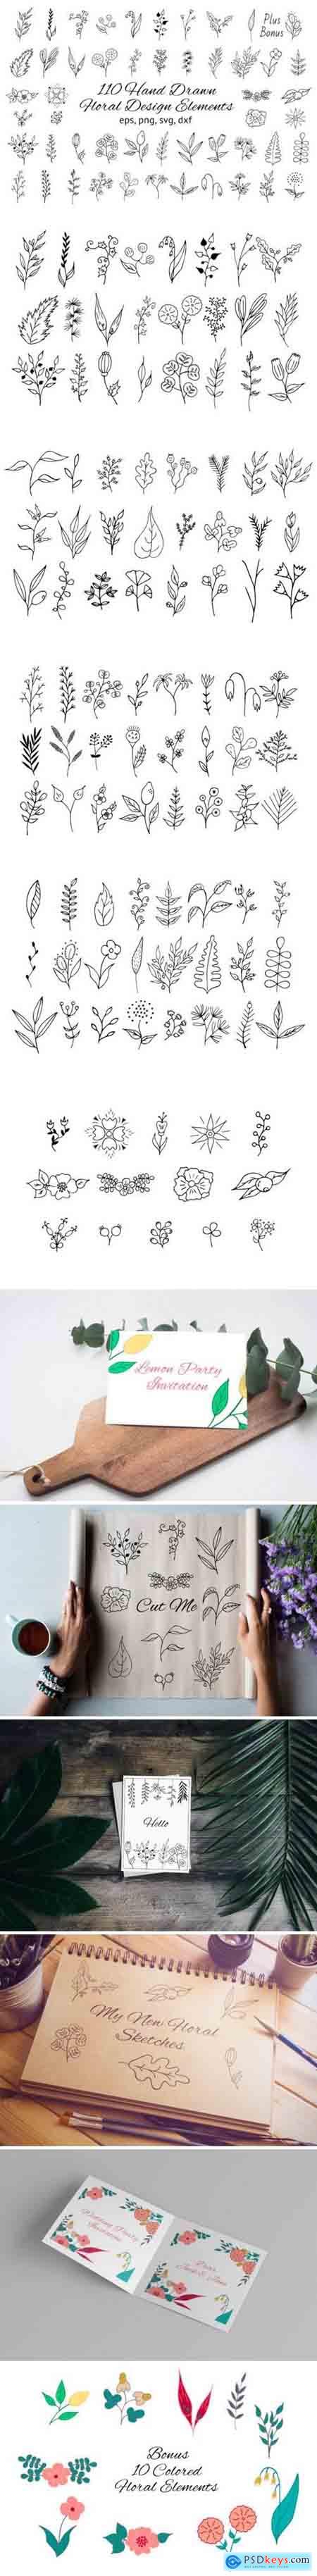 110 Hand drawn Floral Design Elements